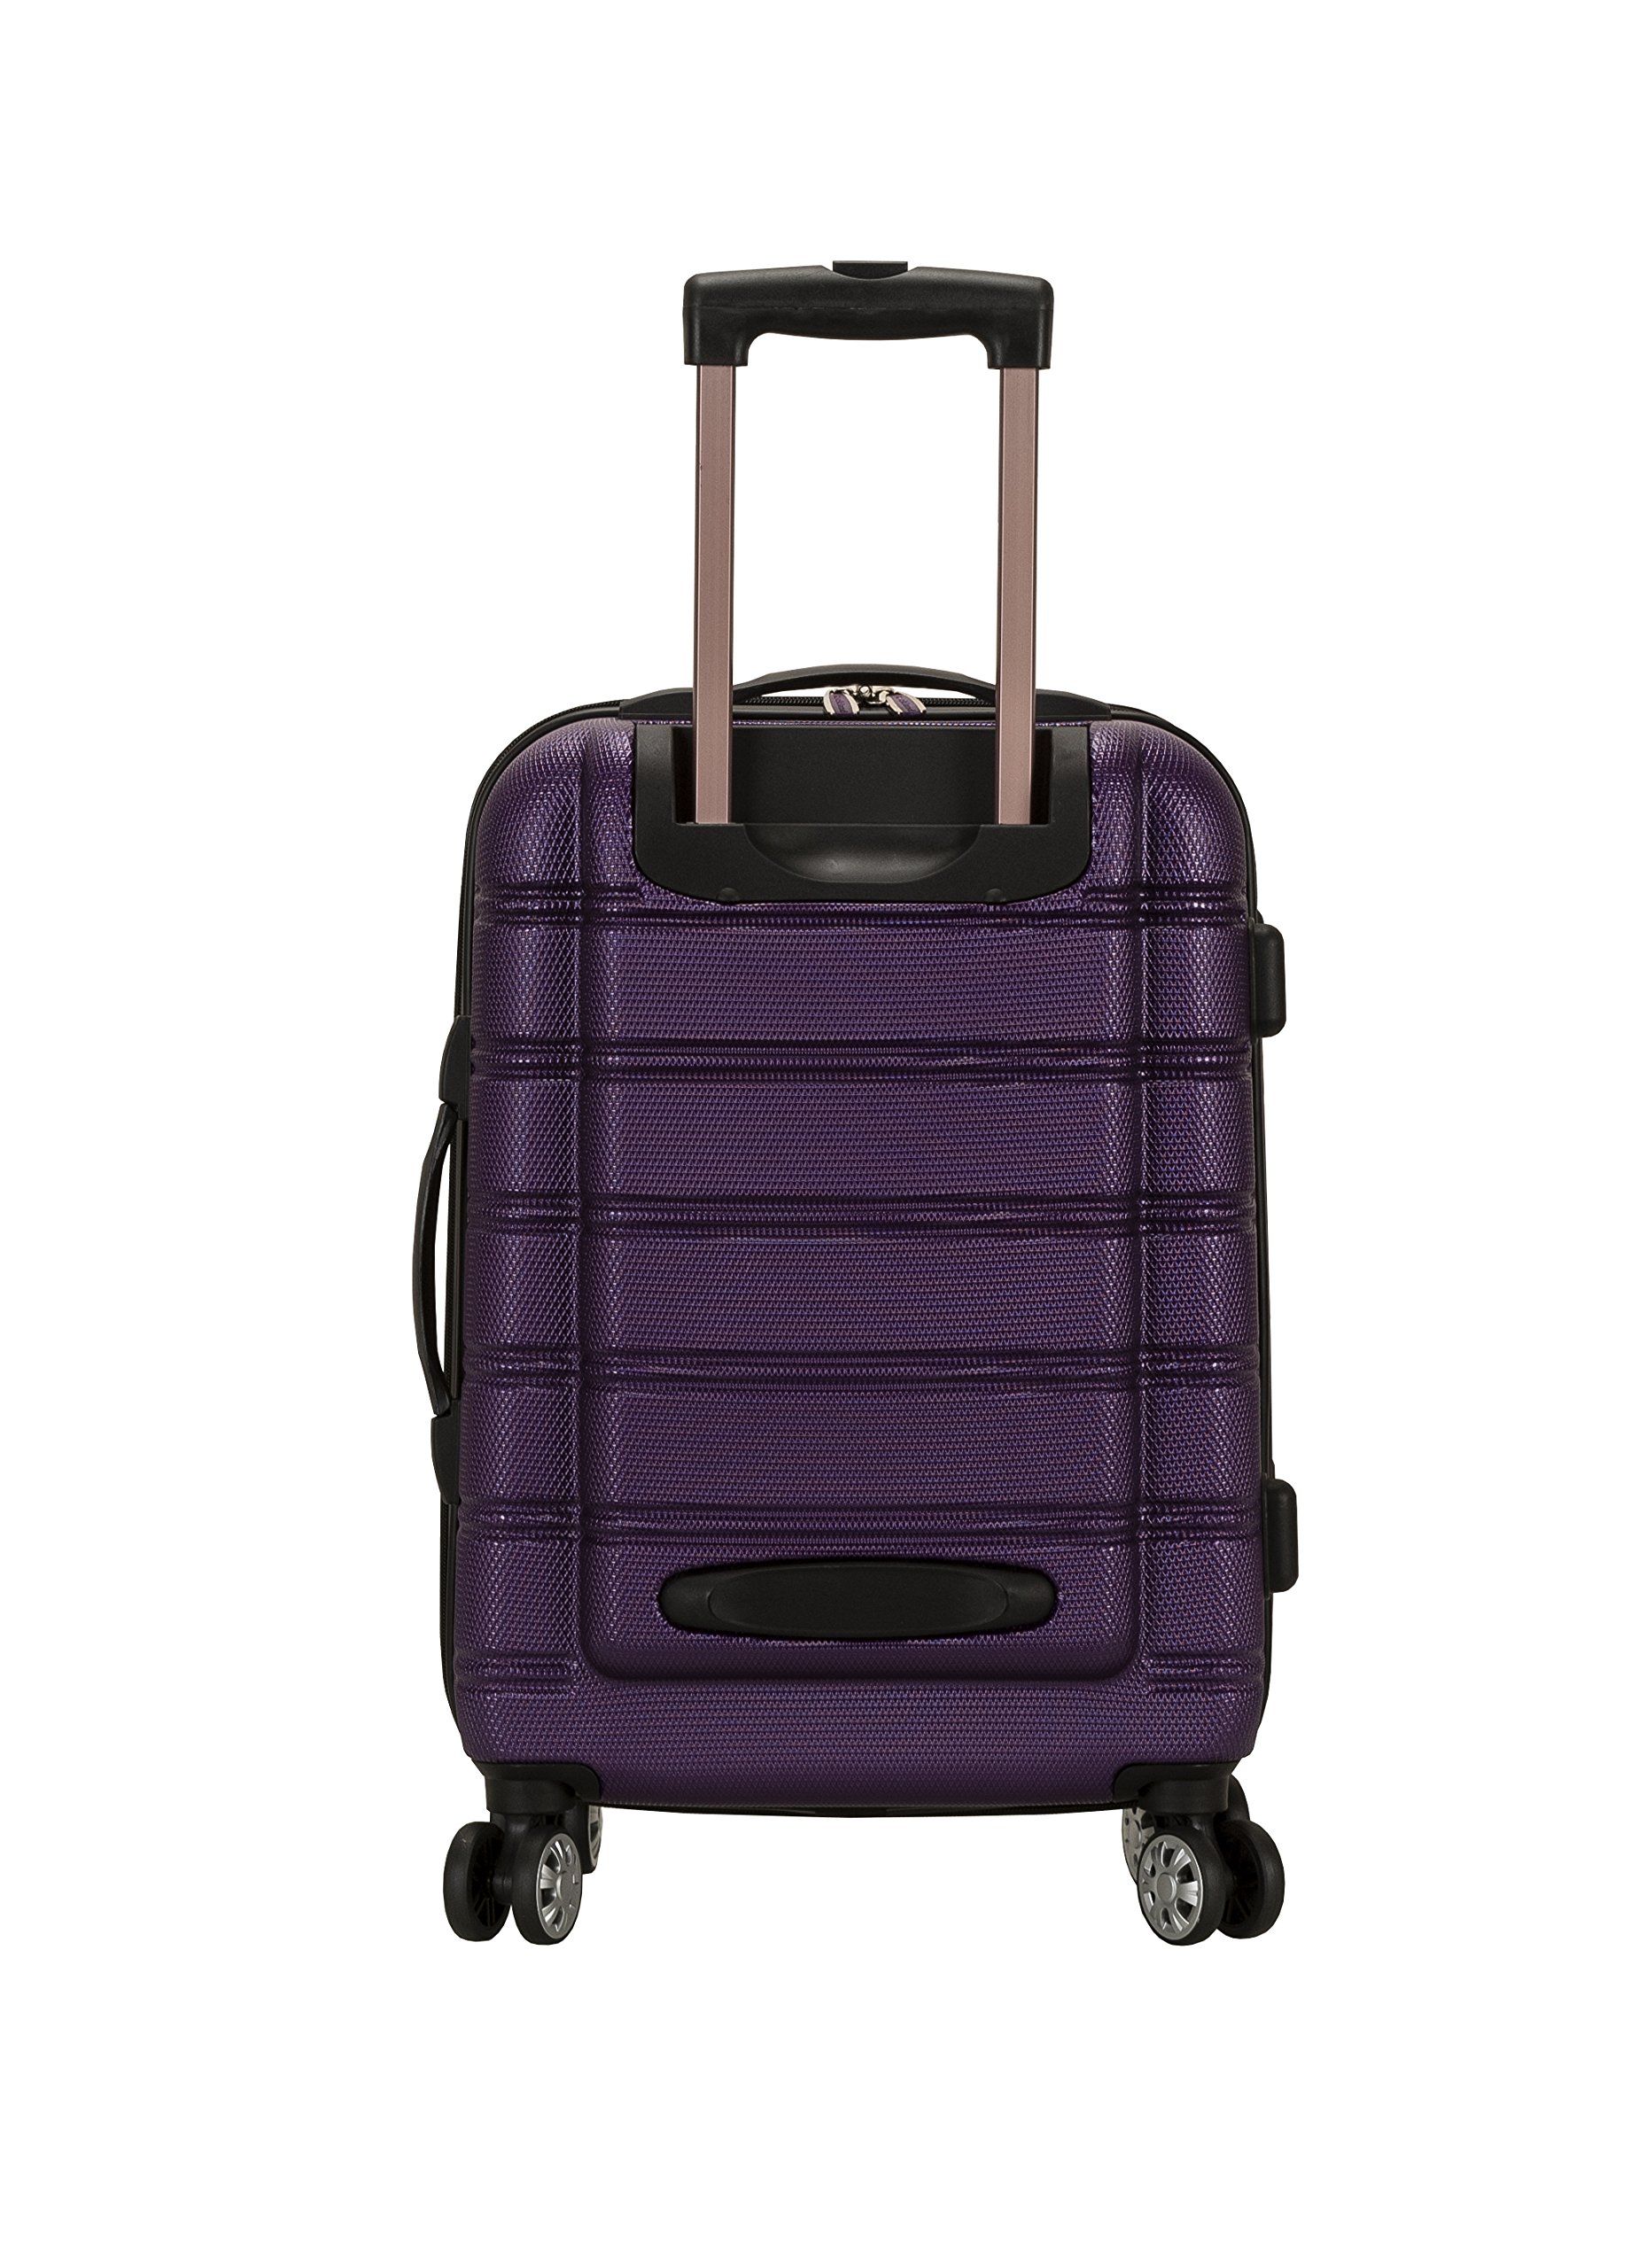 Rockland Melbourne Hardside Expandable Spinner Wheel Luggage, Purple, 2-Piece Set (20/28)